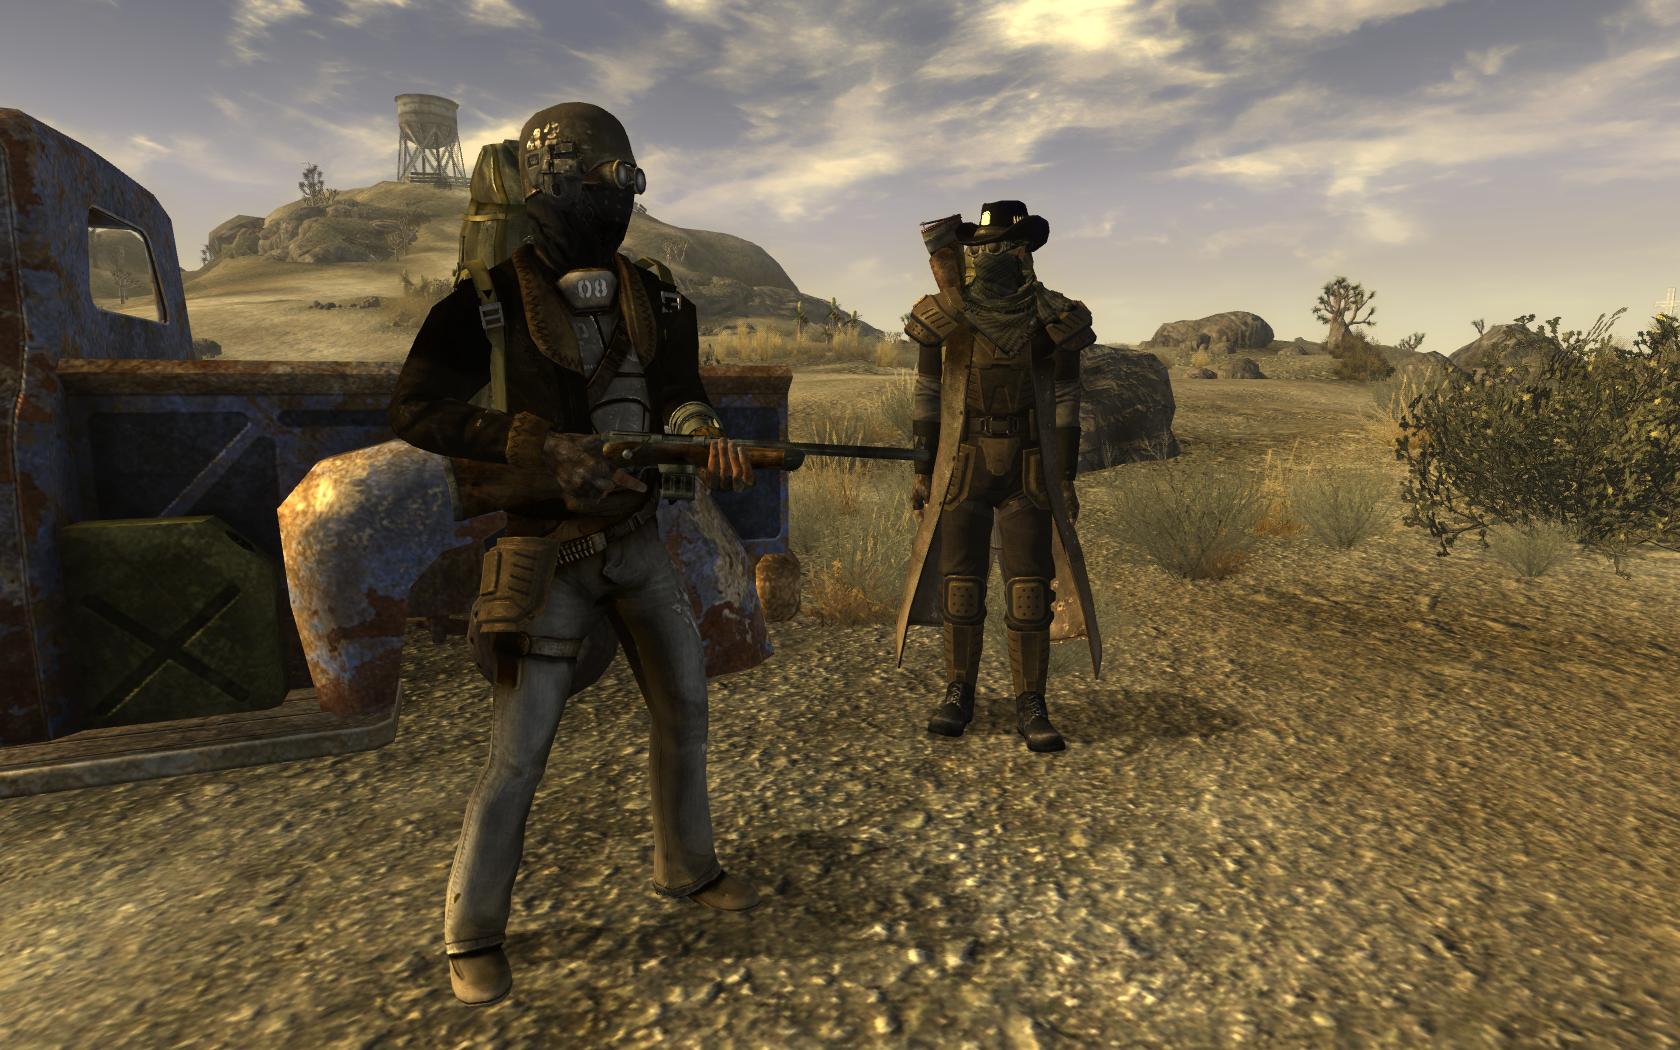 Fallout new sfw. Fallout New Vegas NCR Ranger. Одежда рейнджера Fallout New Vegas. Fallout New Vegas NCR Ranger Armor. НКР фоллаут.